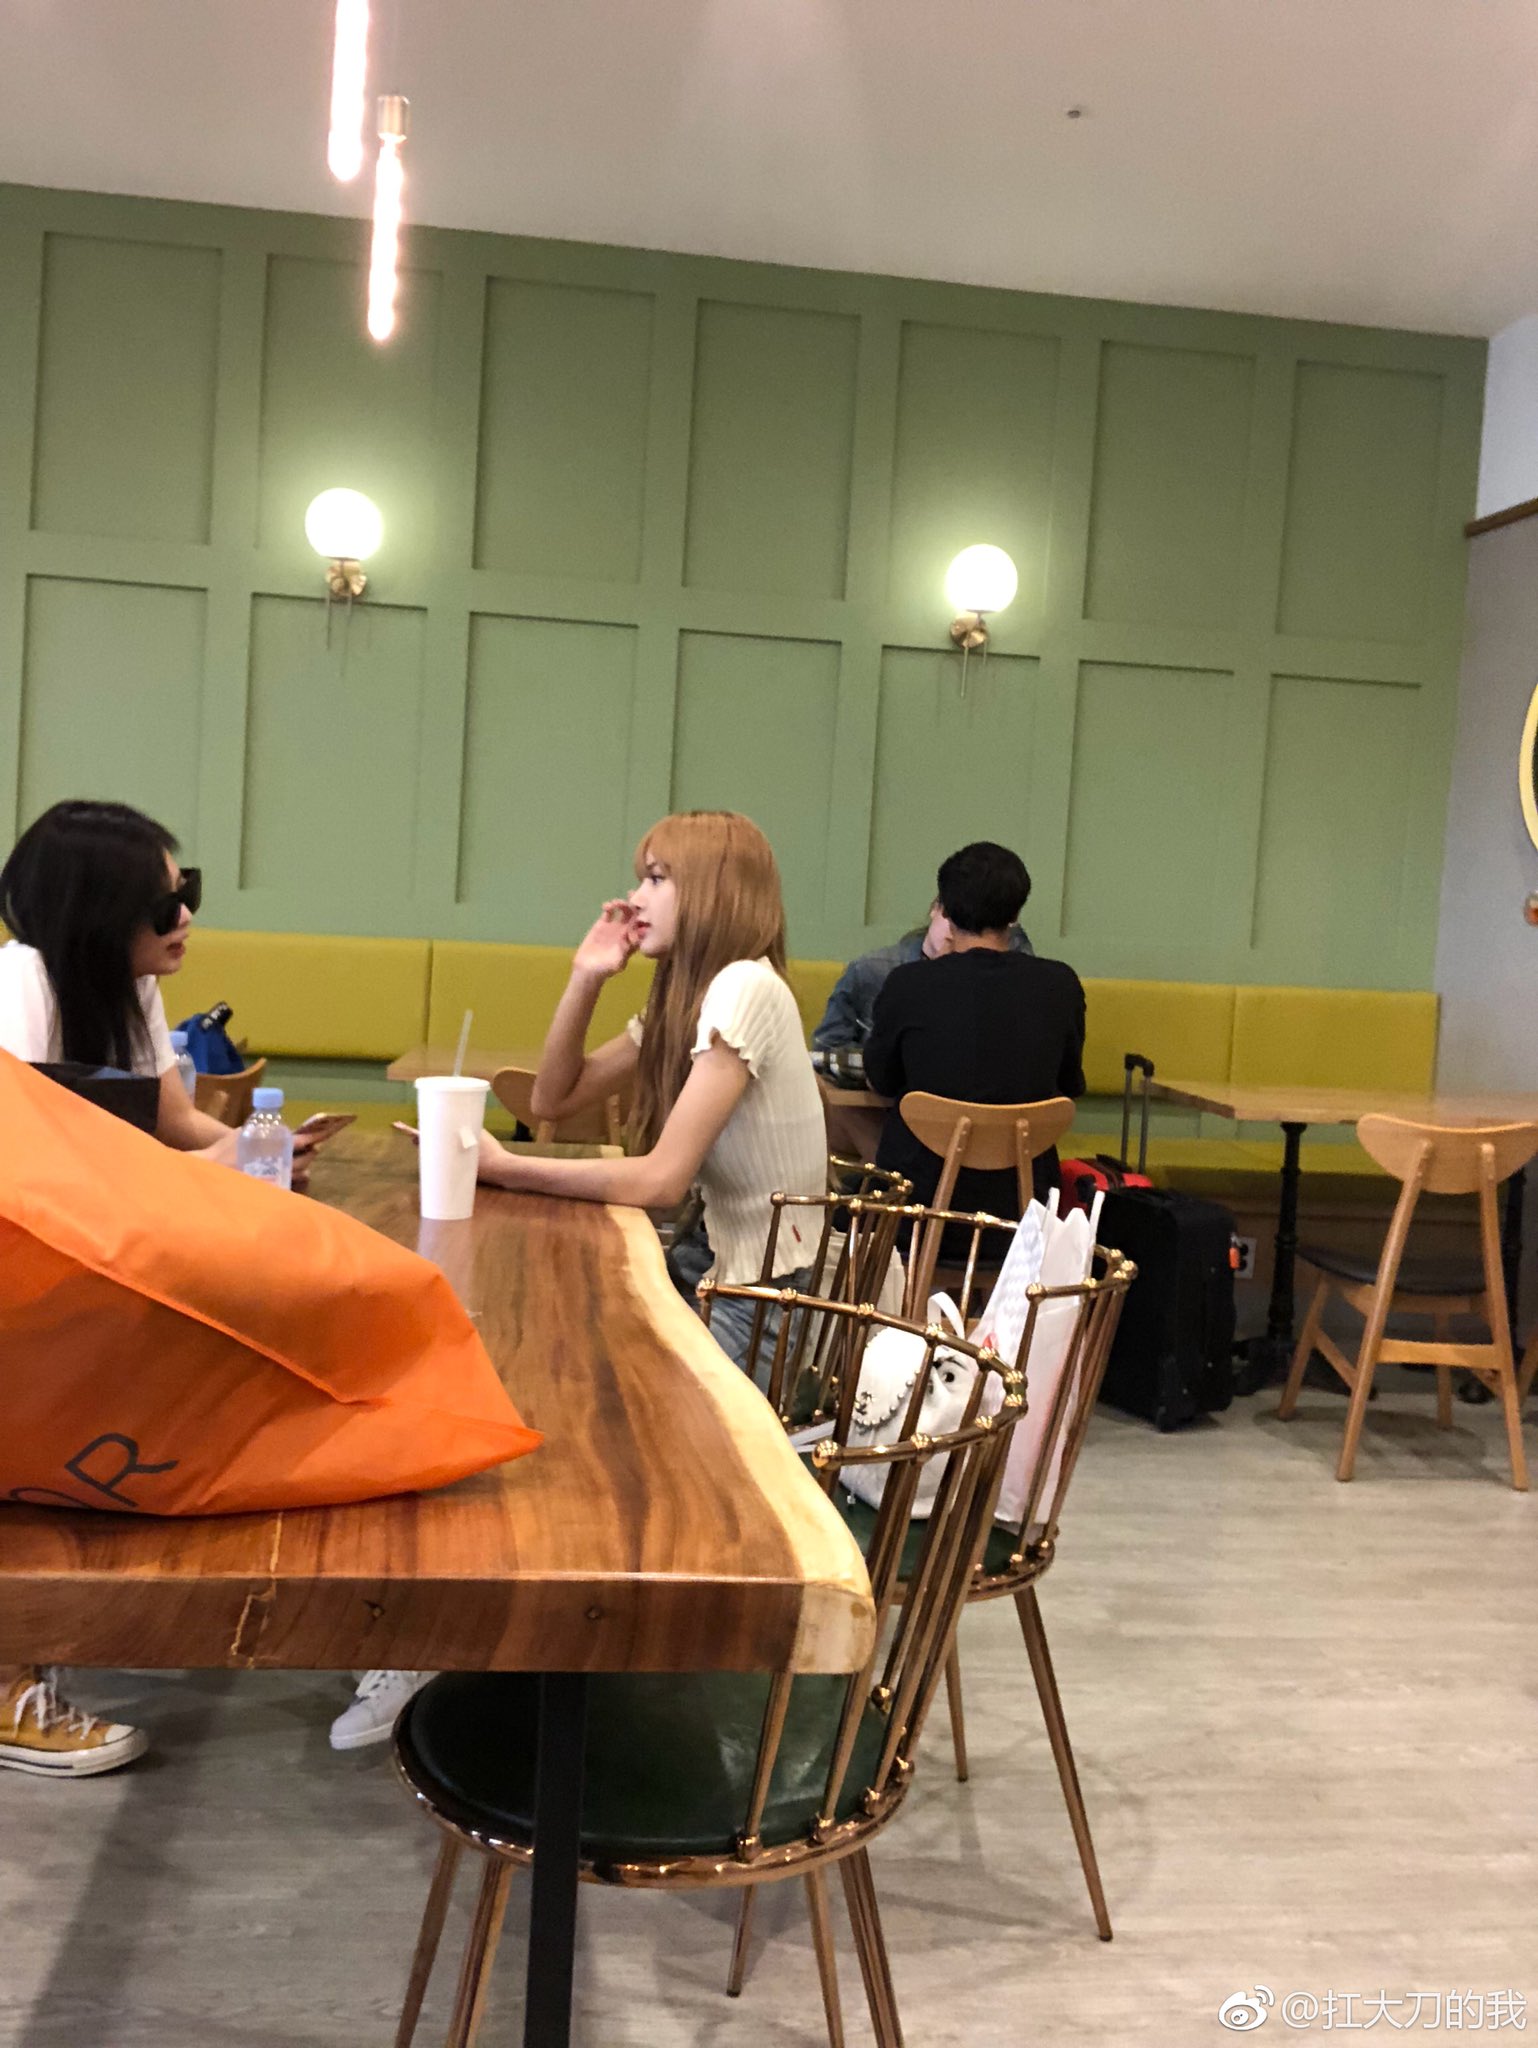 blackpink members jennie lisa jisoo rose at restaurant July 18, 2018